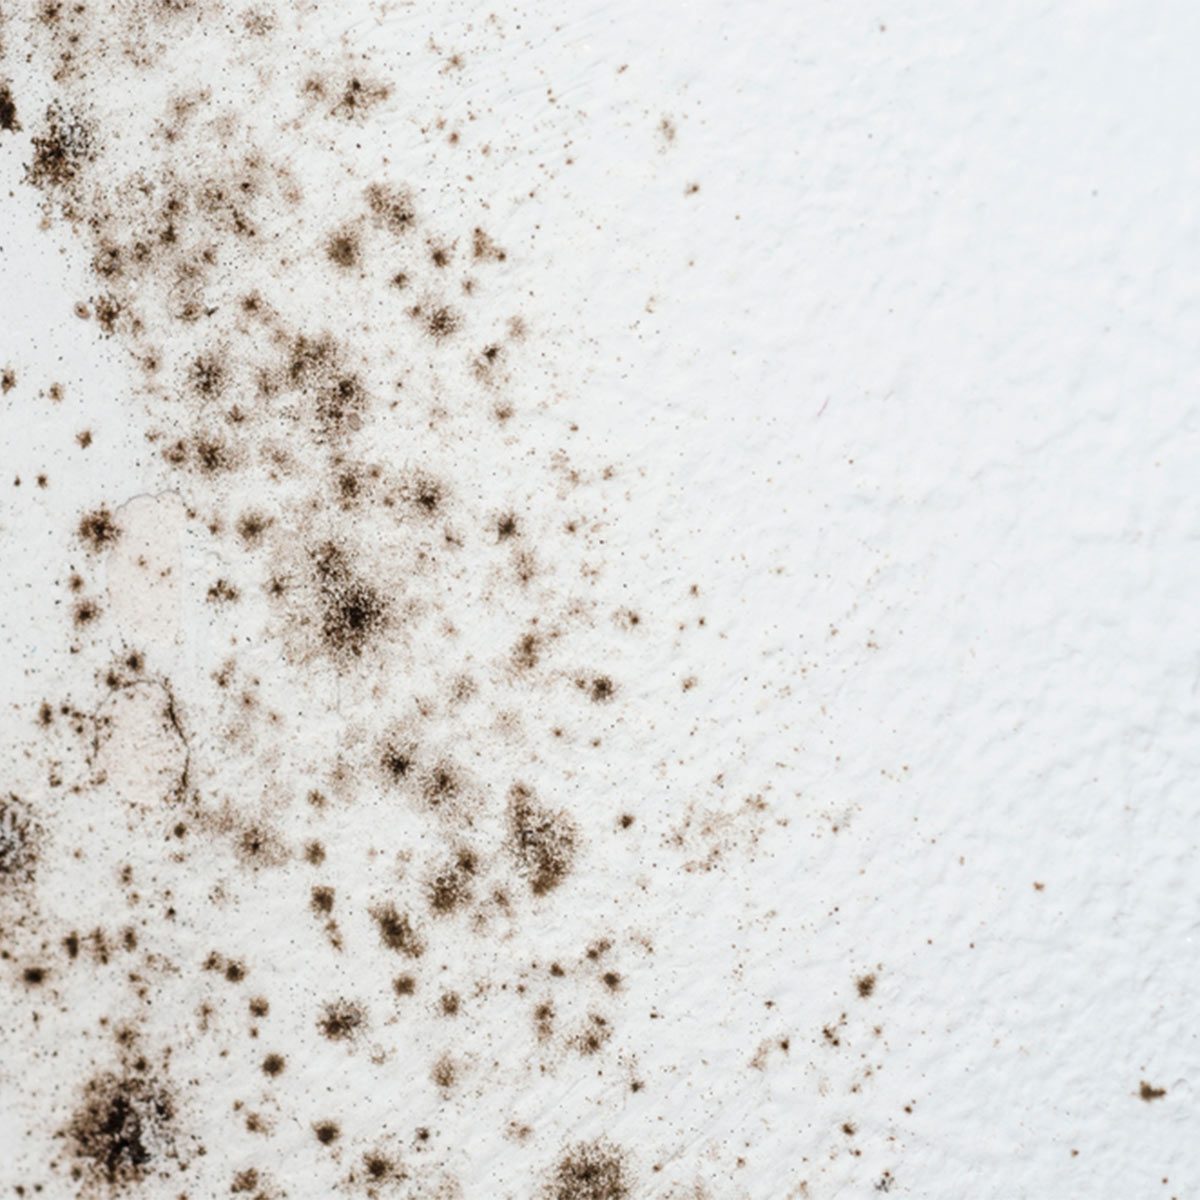 How To Get Rid Of Mold On Bathroom Walls Family Handyman